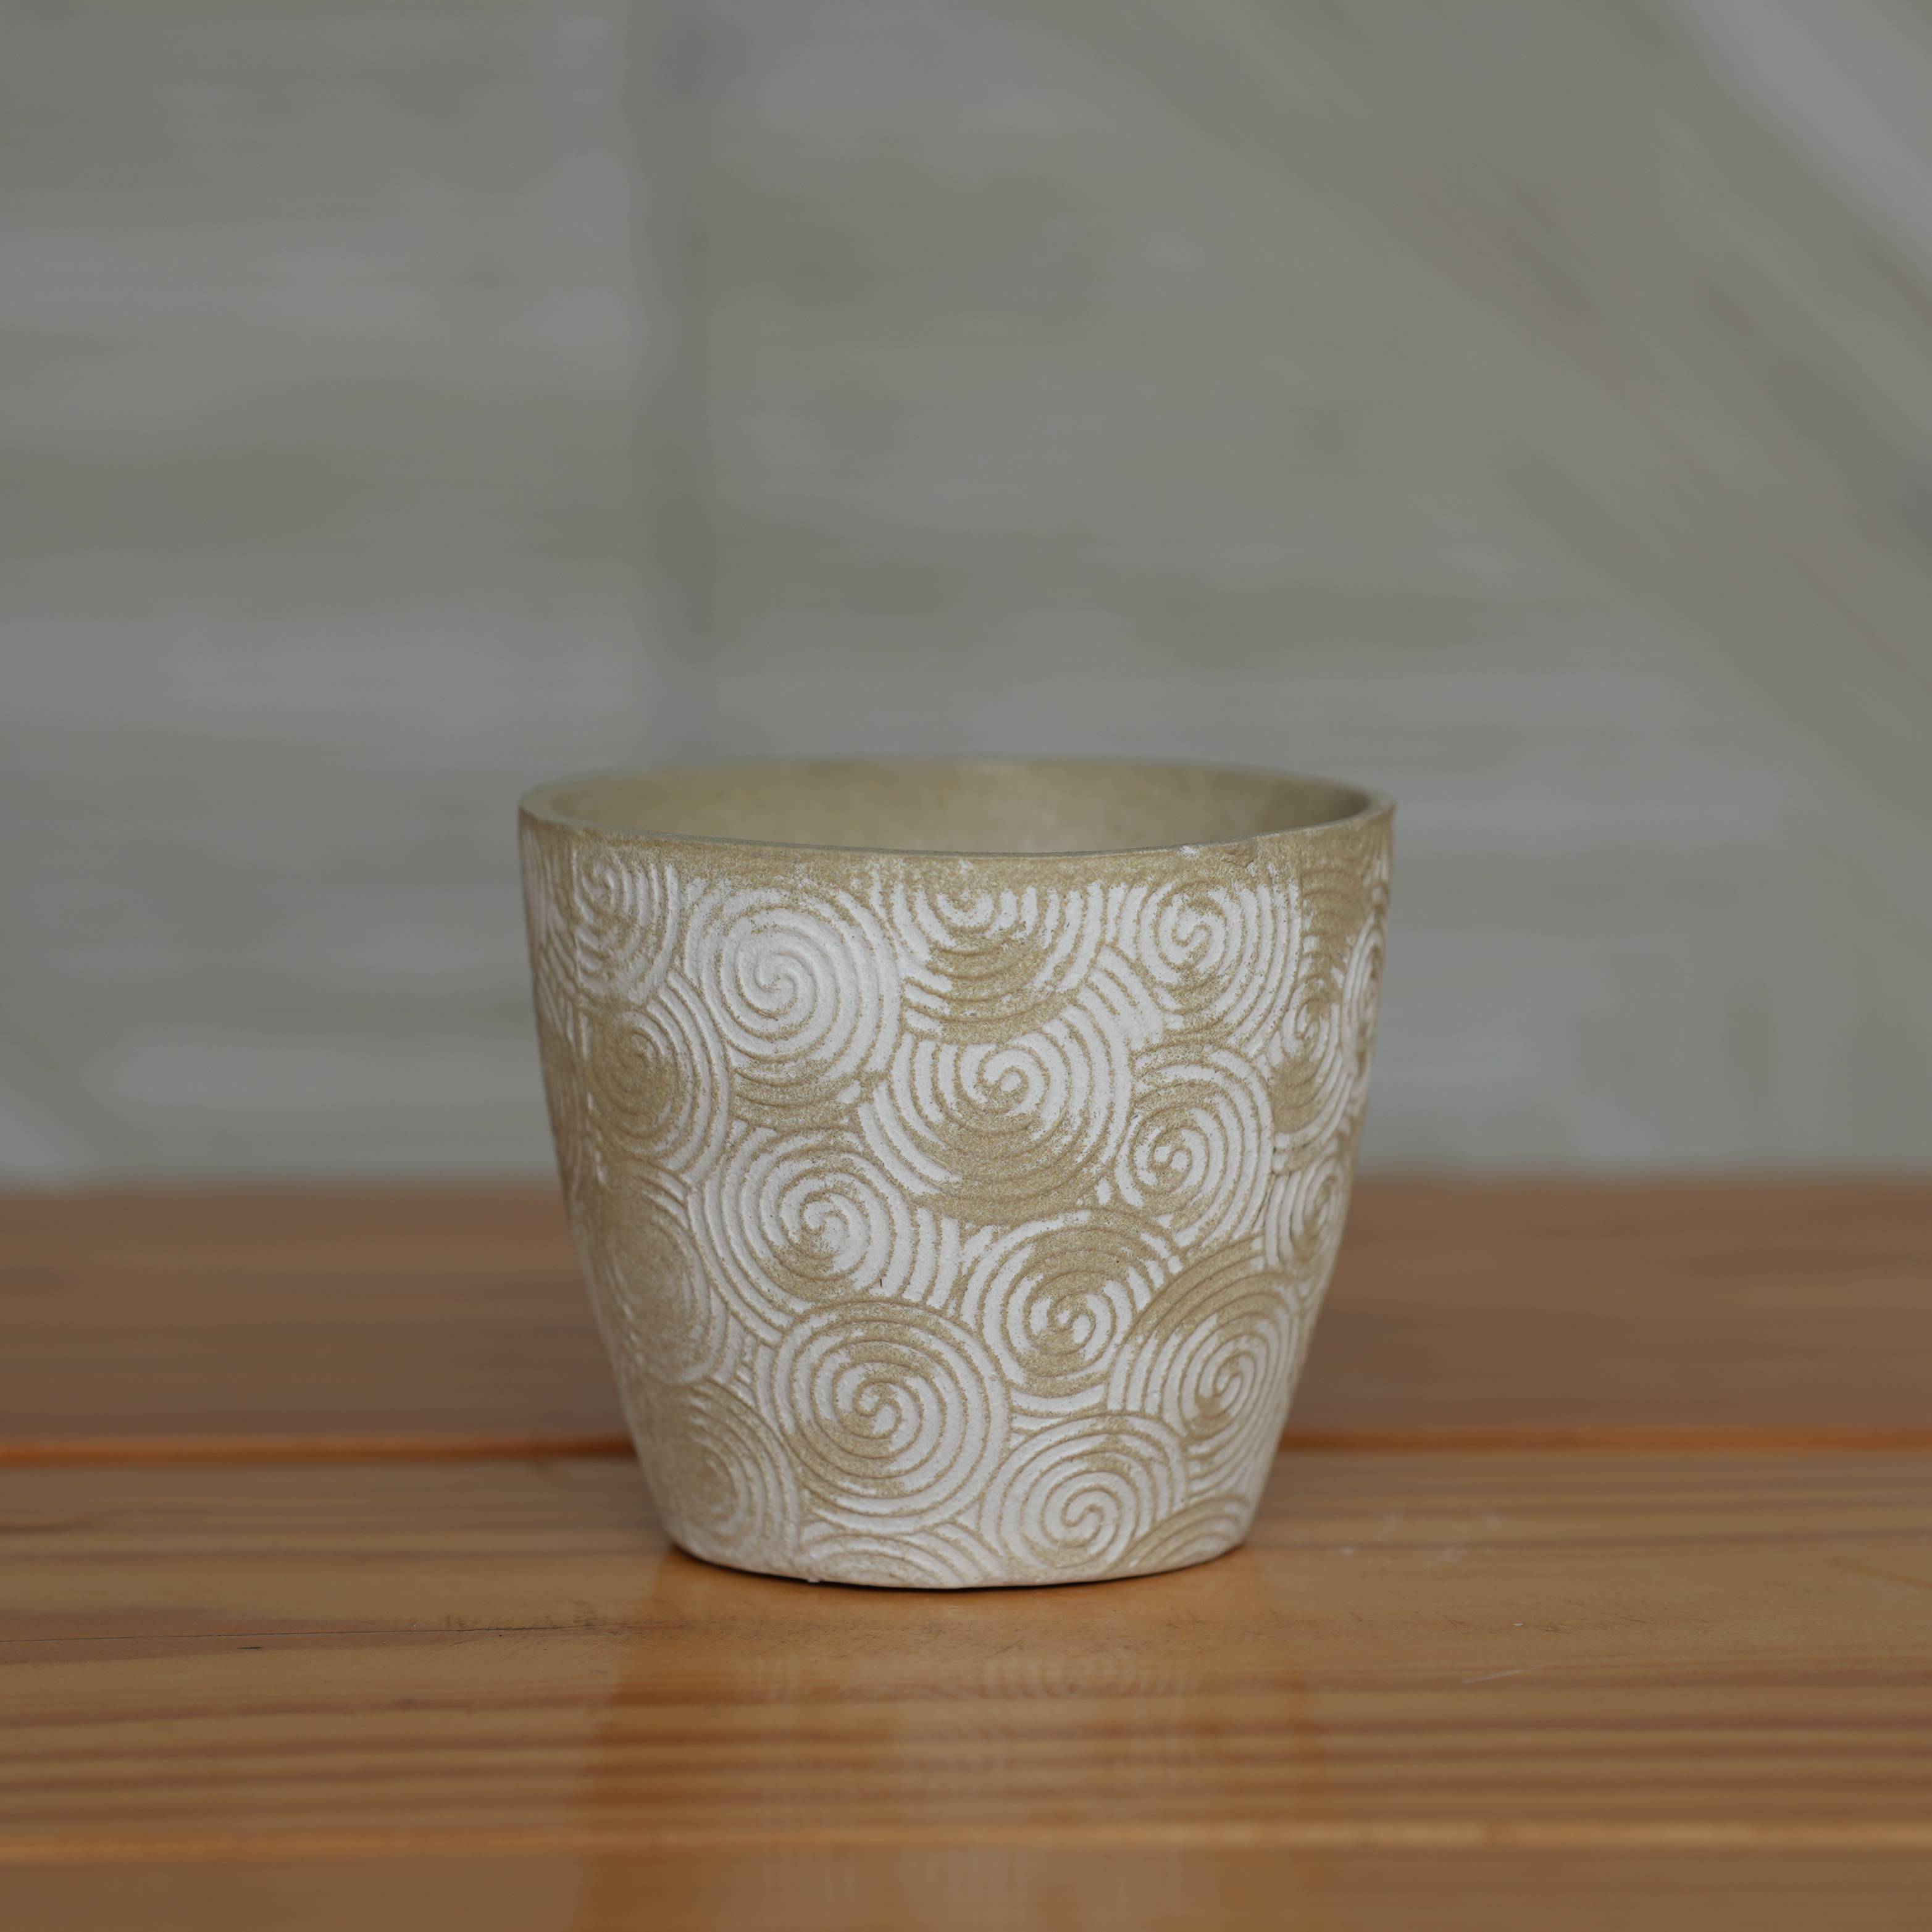 Ceramic Spiral Swirl Textured Planter/ Pot for Plants